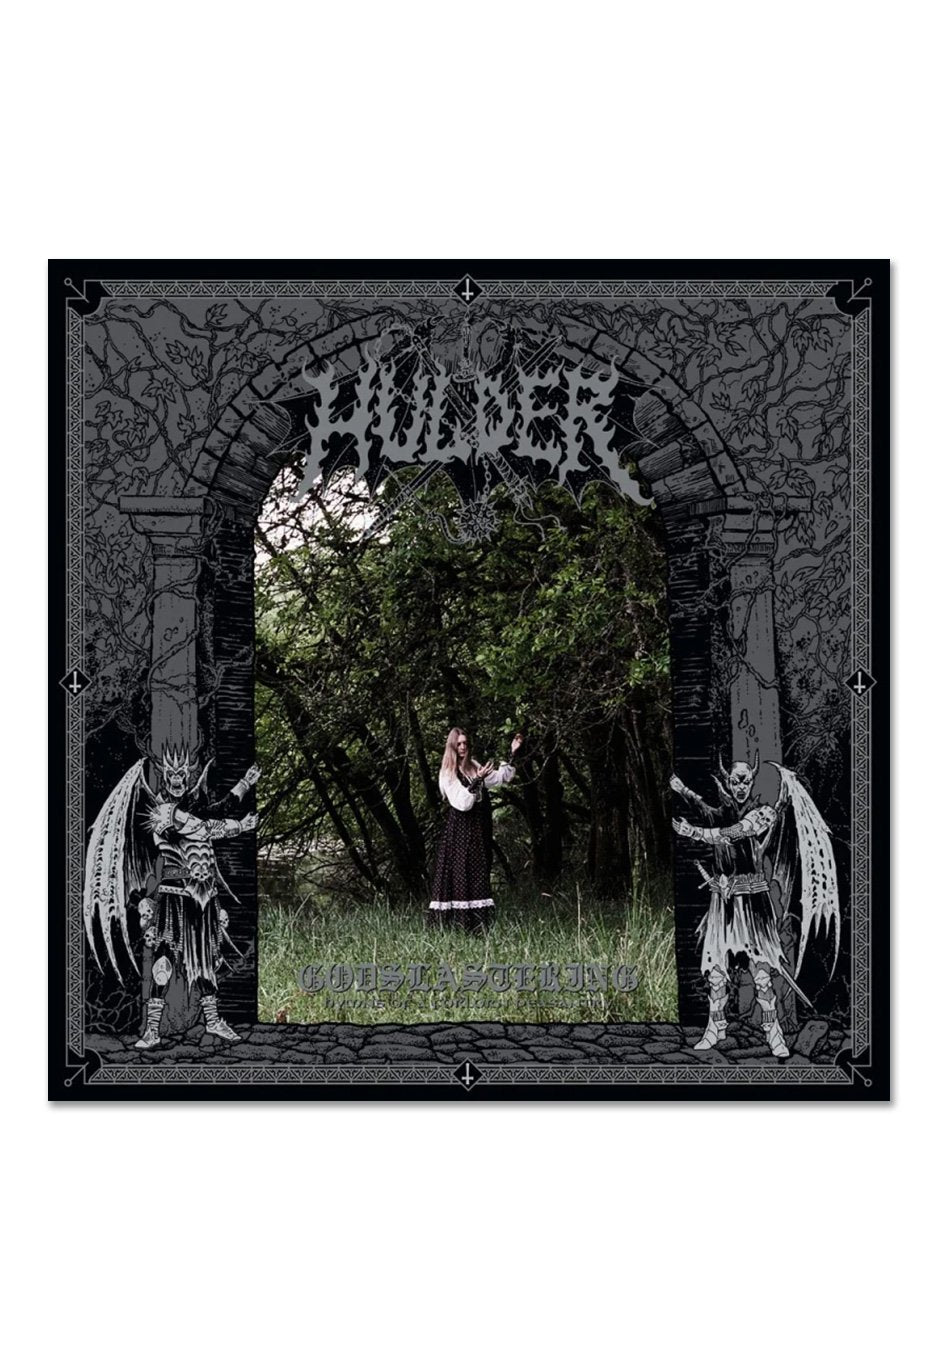 Hulder - Godslastering: Hymns of a Forlorn Peasantry - Vinyl